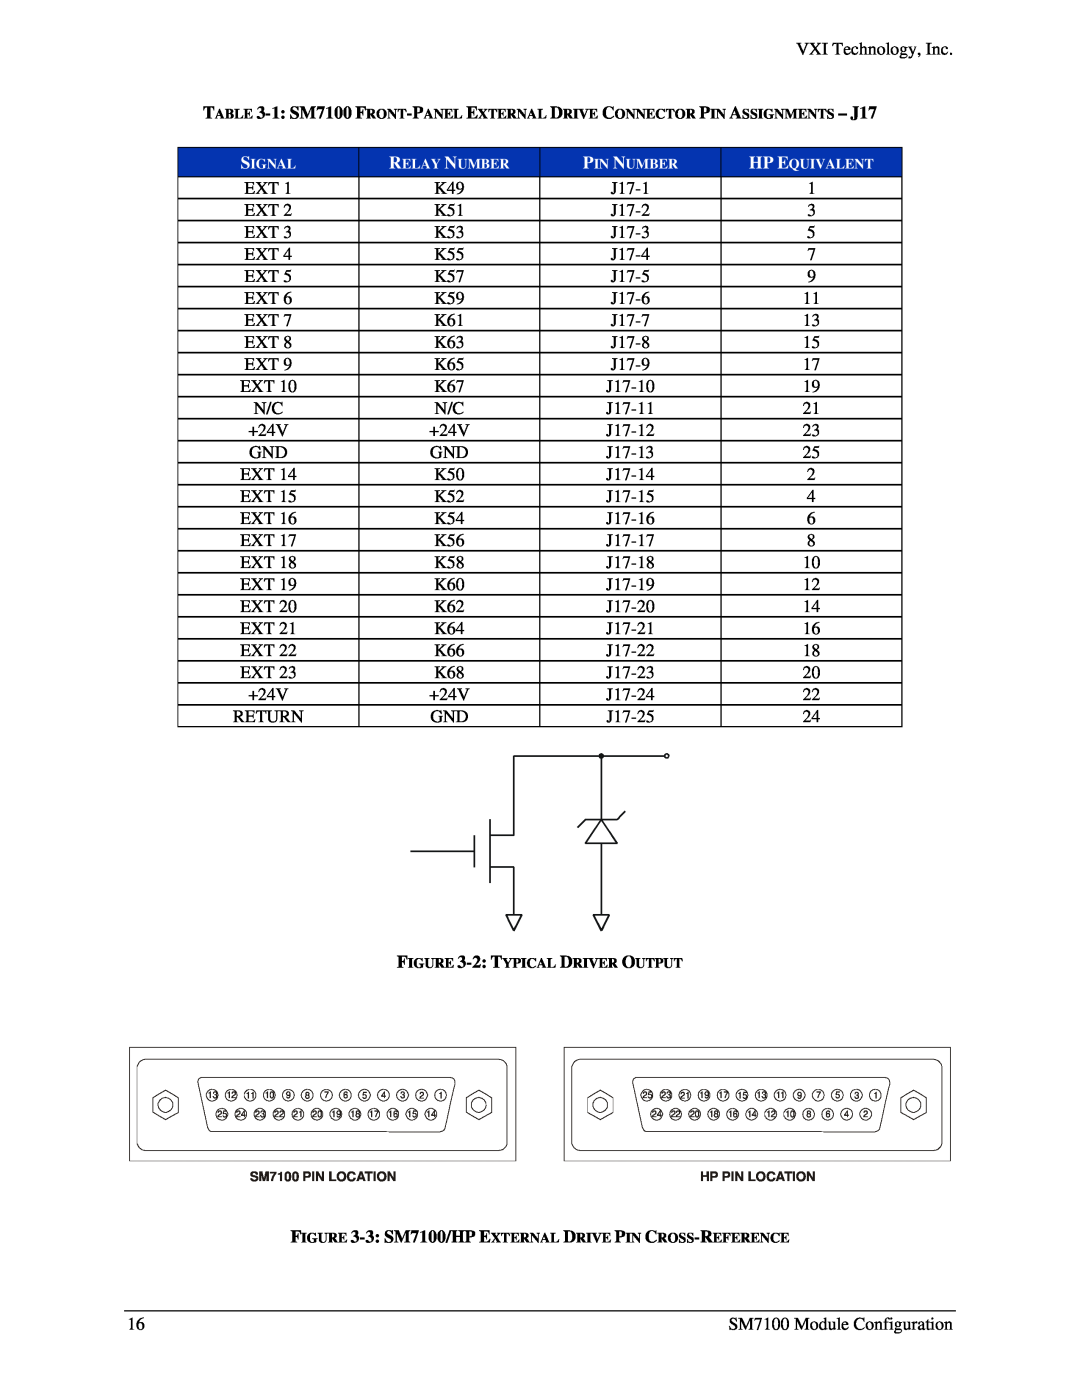 VXI Microwave Matrix, SM7100 user manual VXI Technology, Inc 